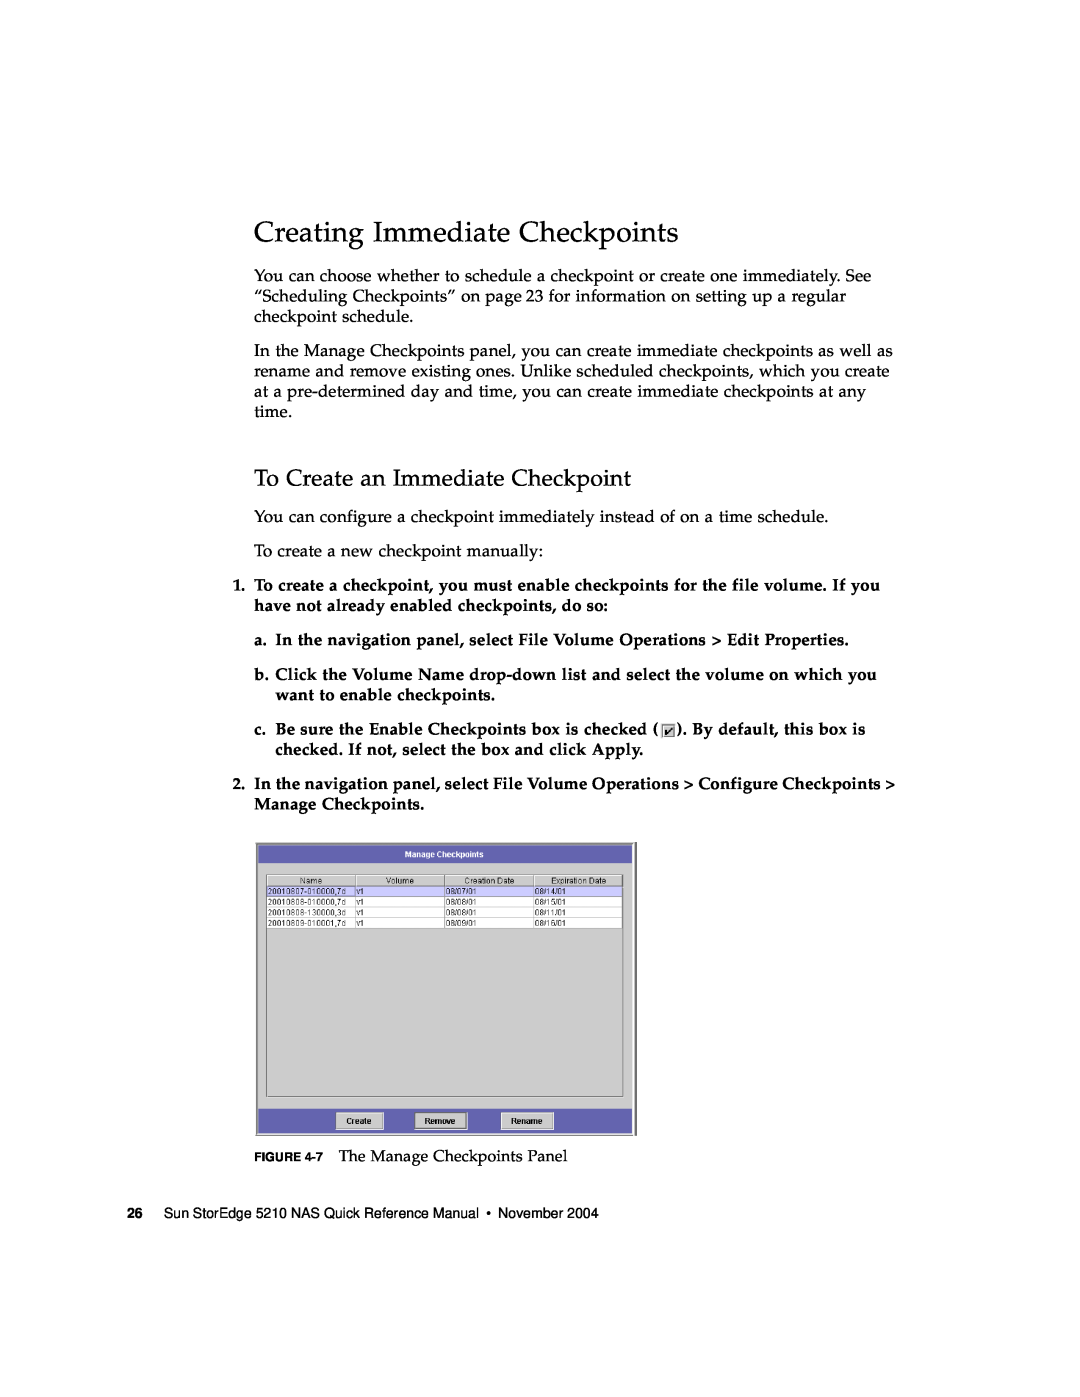 Sun Microsystems 5210 NAS manual Creating Immediate Checkpoints, To Create an Immediate Checkpoint 